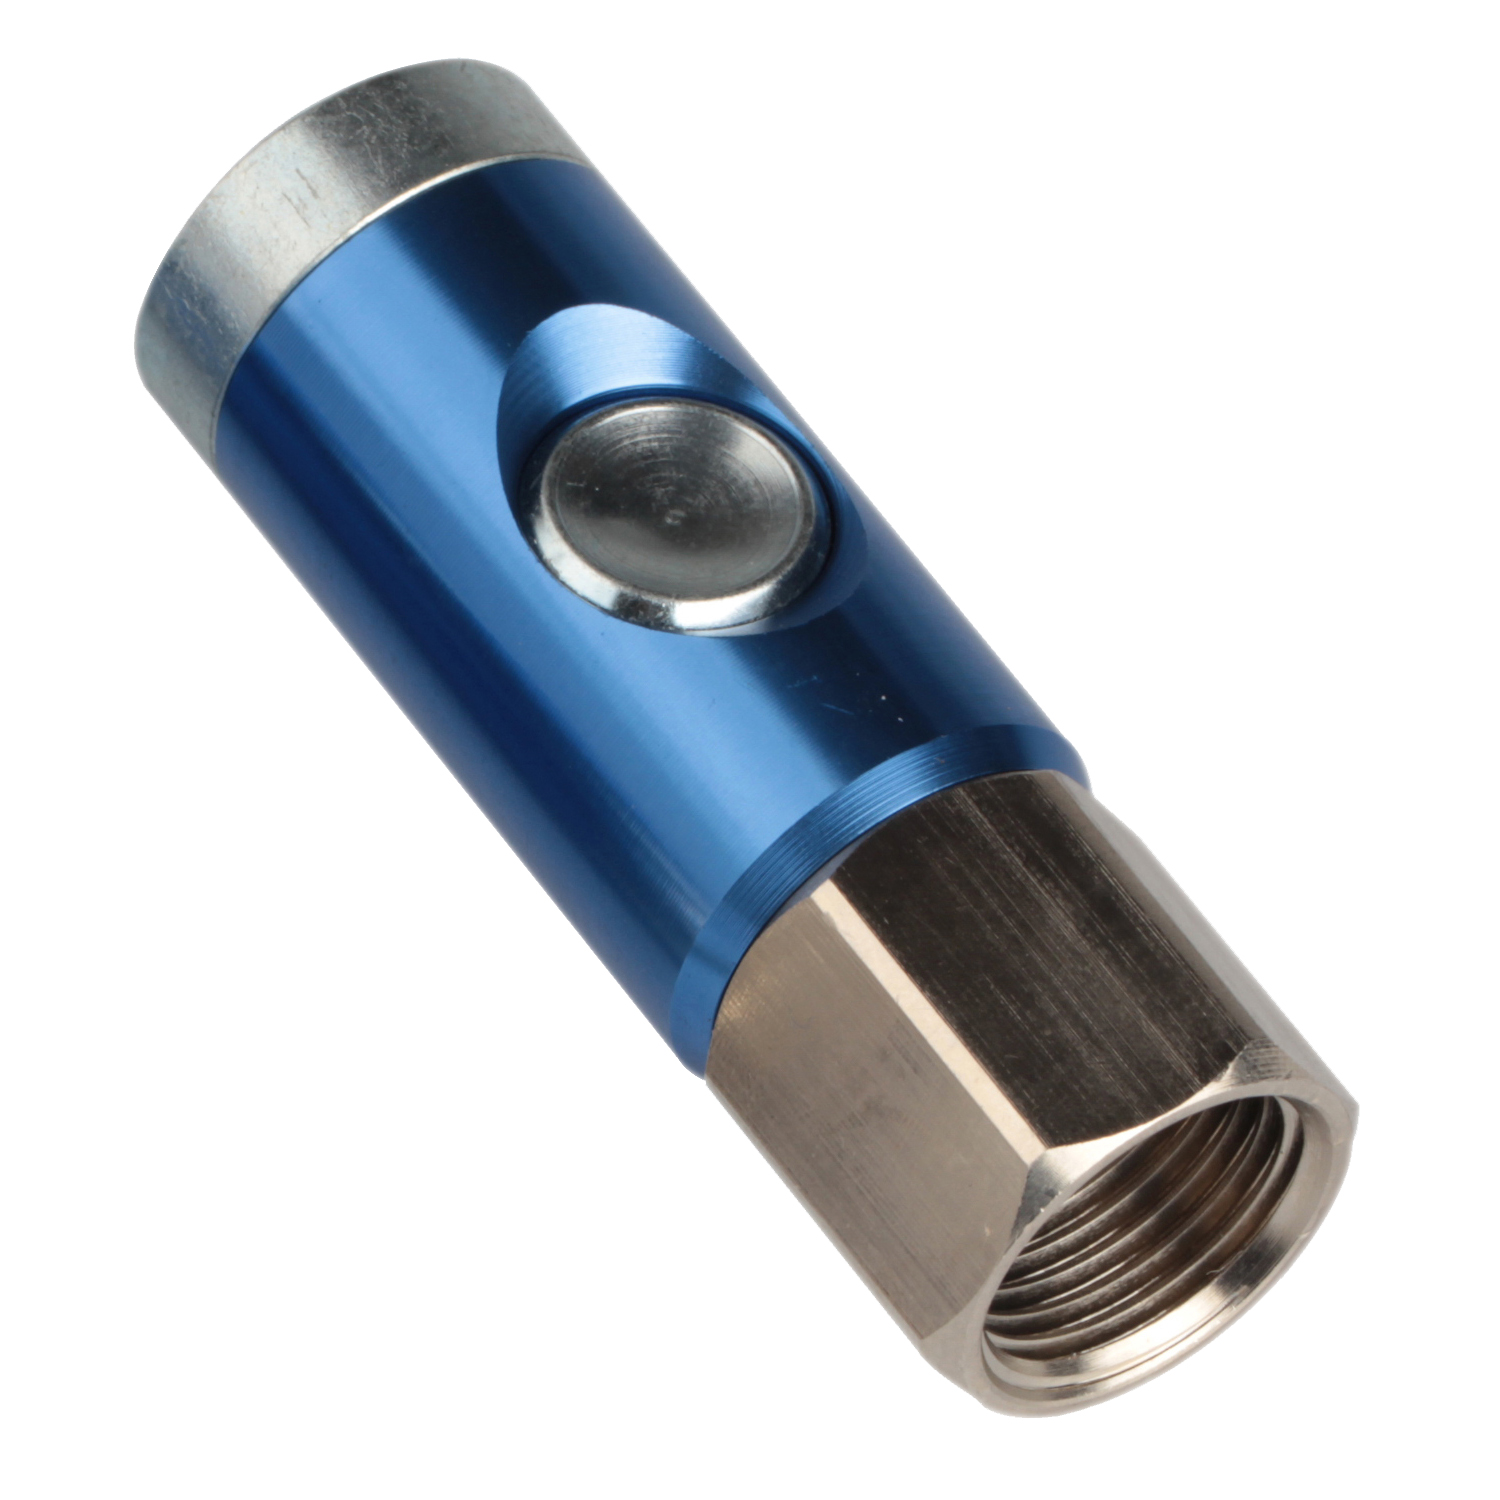 EU 7.5mm Pneumatic button safety quick coupling 